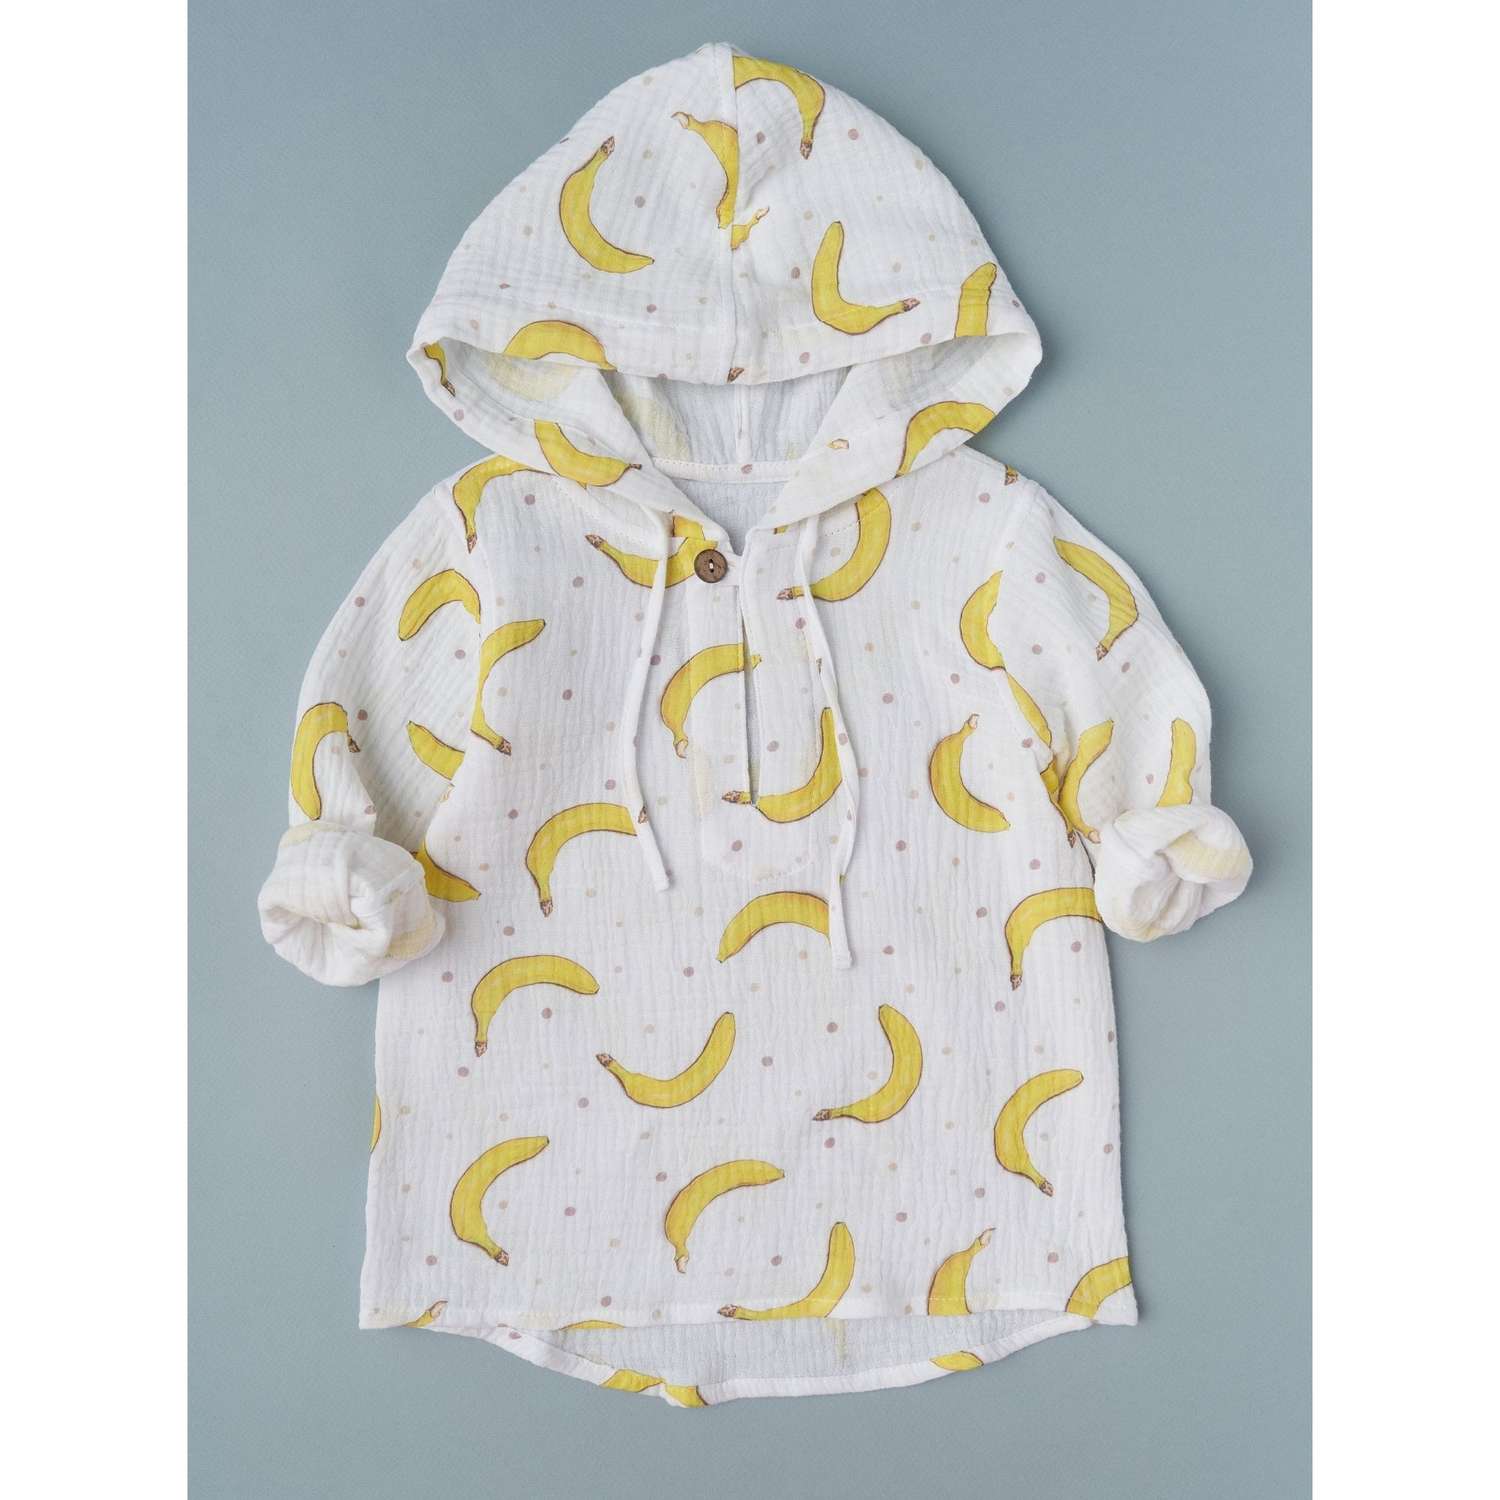 Рубашка Little Star 1025-бананы - фото 1